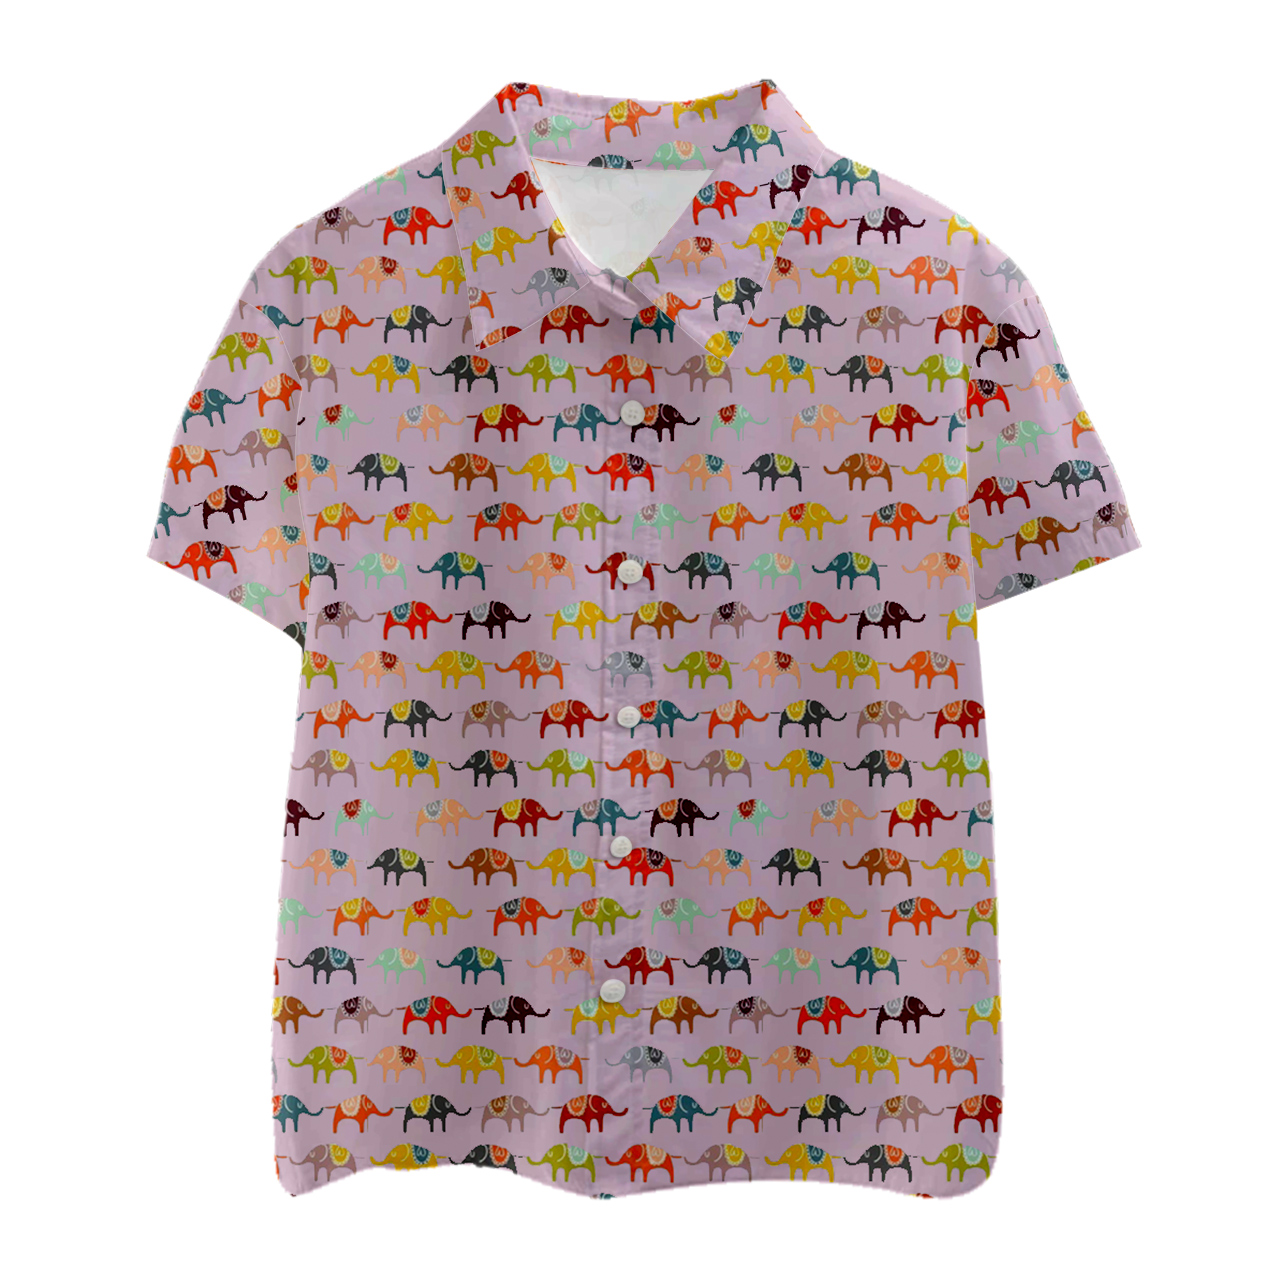 Colorful Elephant Kids Button Shirt